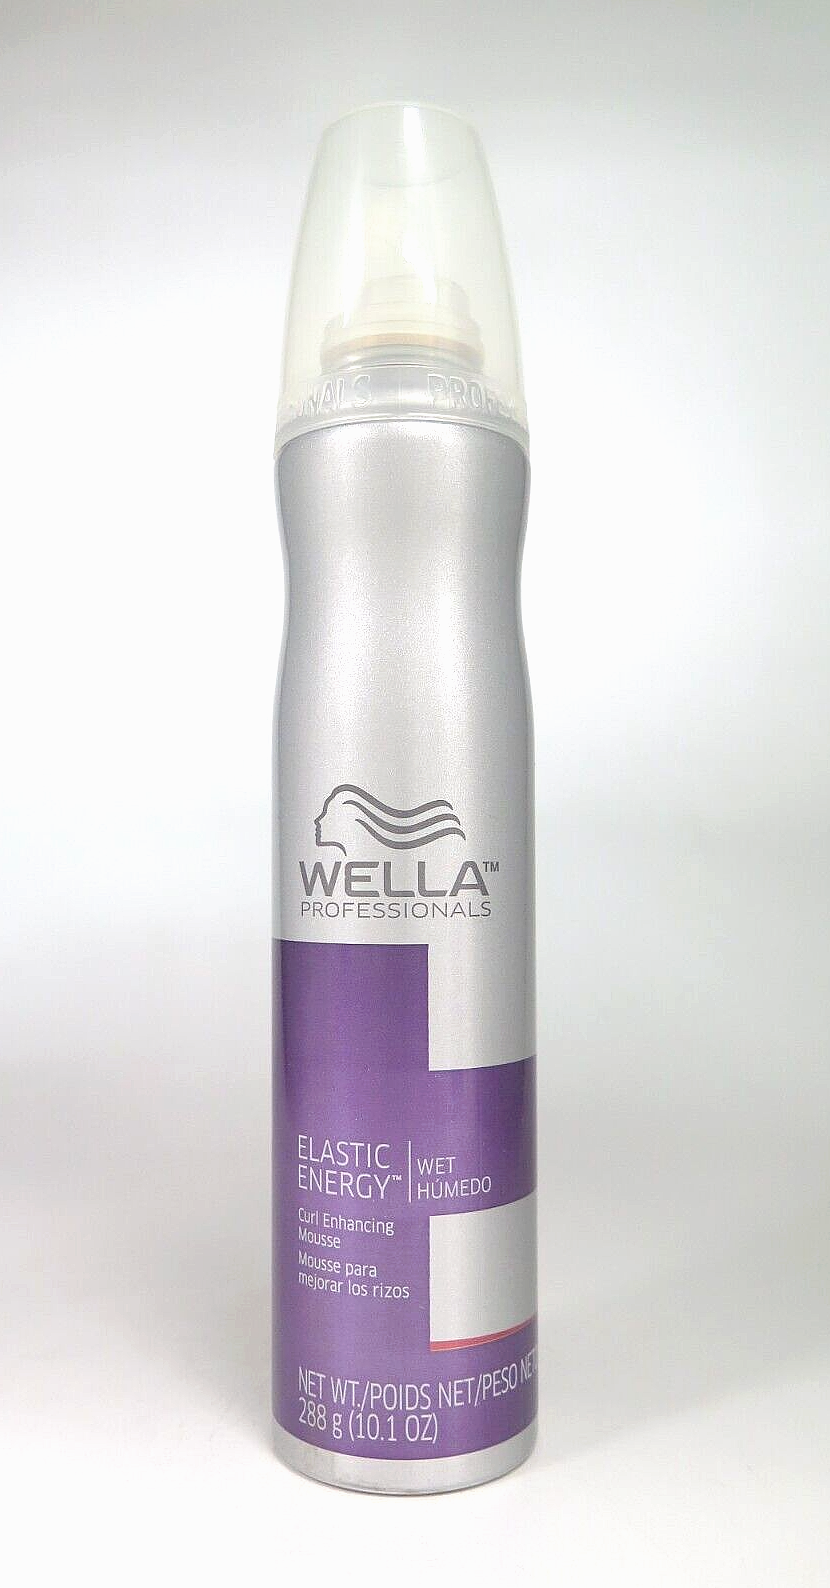 Wella Profesionals Elastic Energy Curl Enhancing Mousse 10.1 oz / 288 g - $34.95